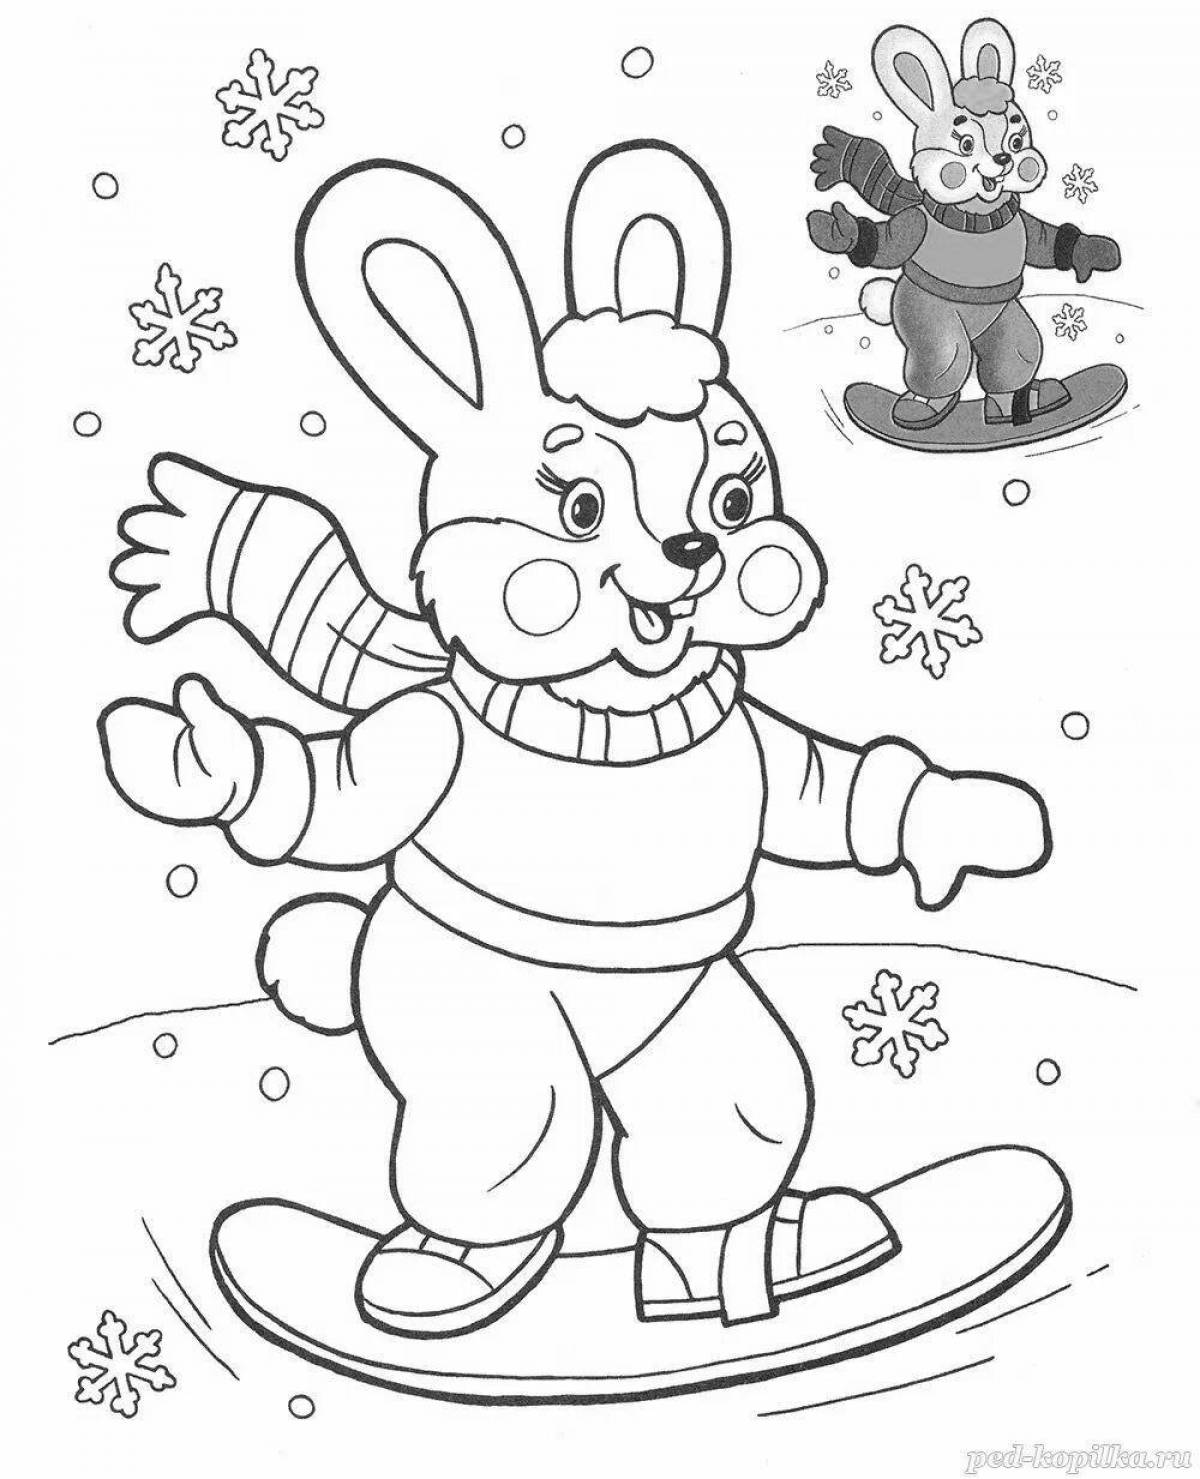 Cute bunny coloring book in winter